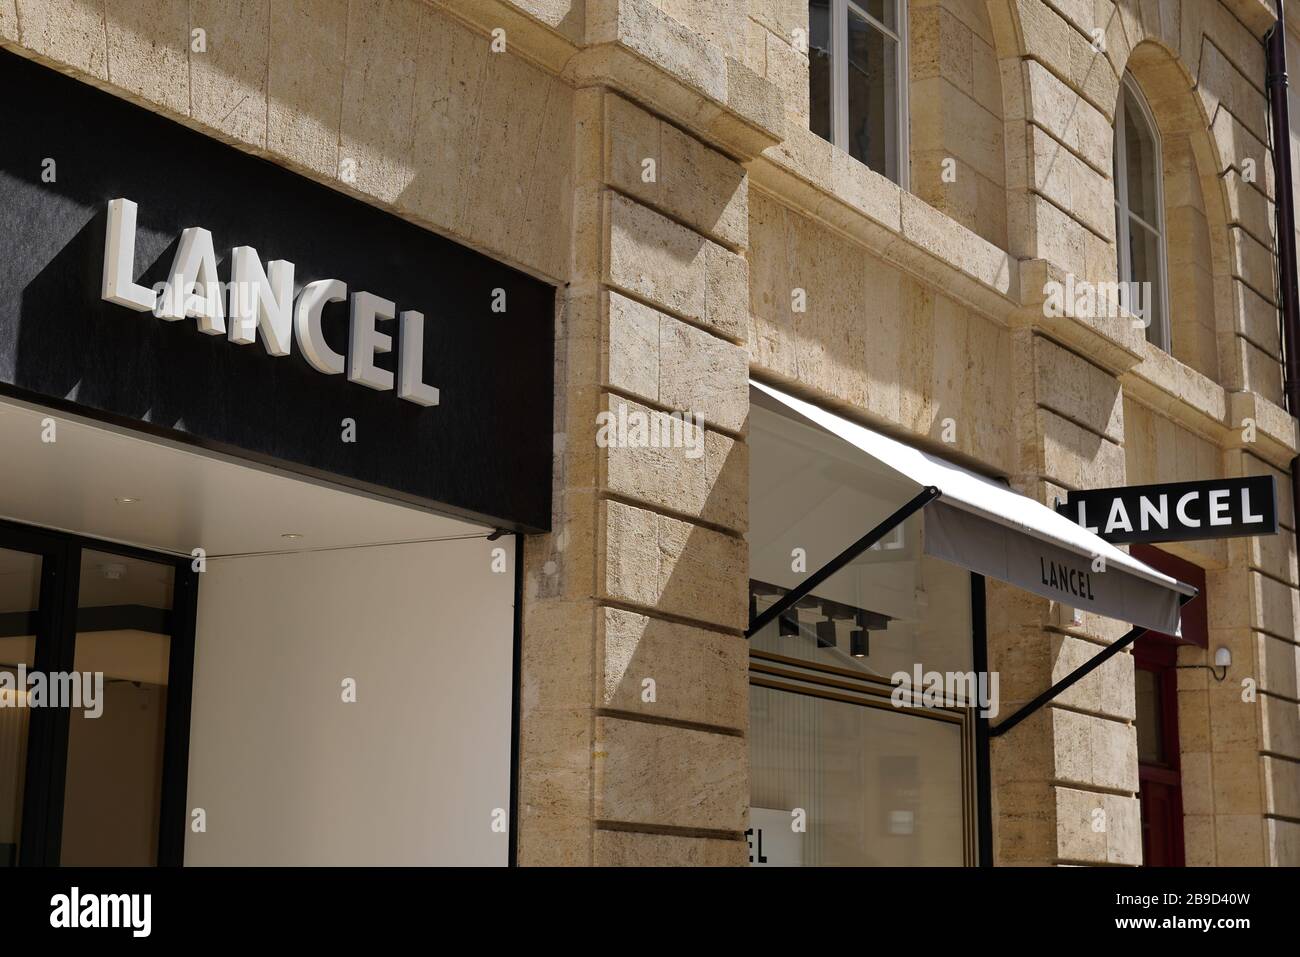 Bordeaux , Aquitaine / France - 09 18 2019 : Lancel store shop sign in street Stock Photo